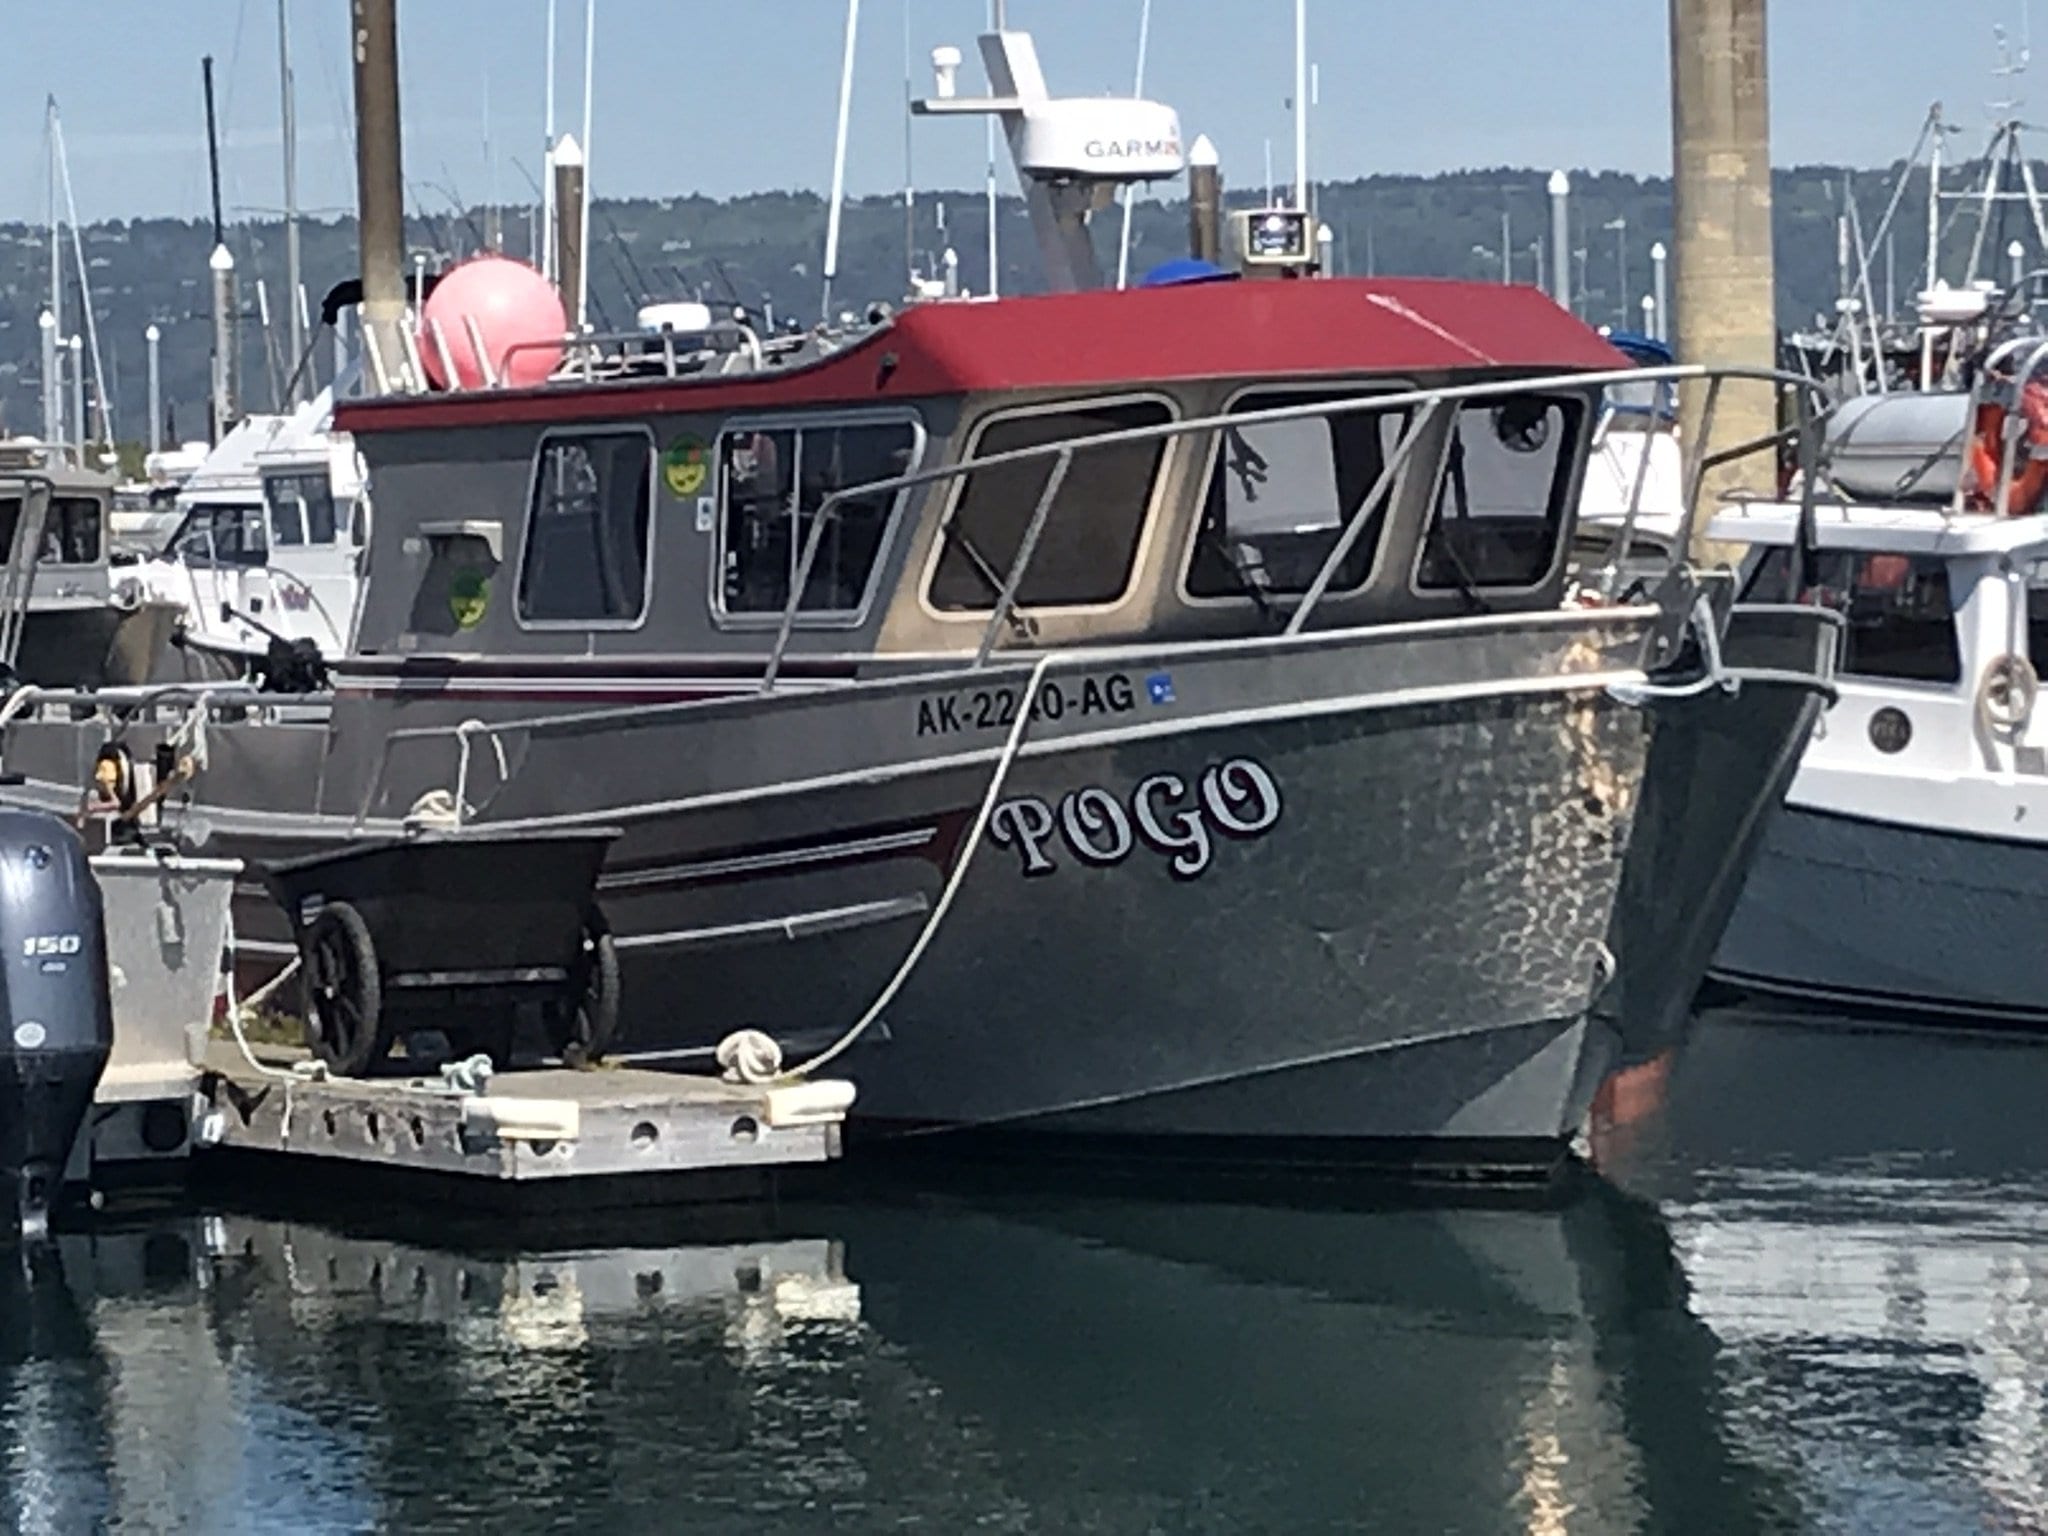 Pogo fishing boat at the docks